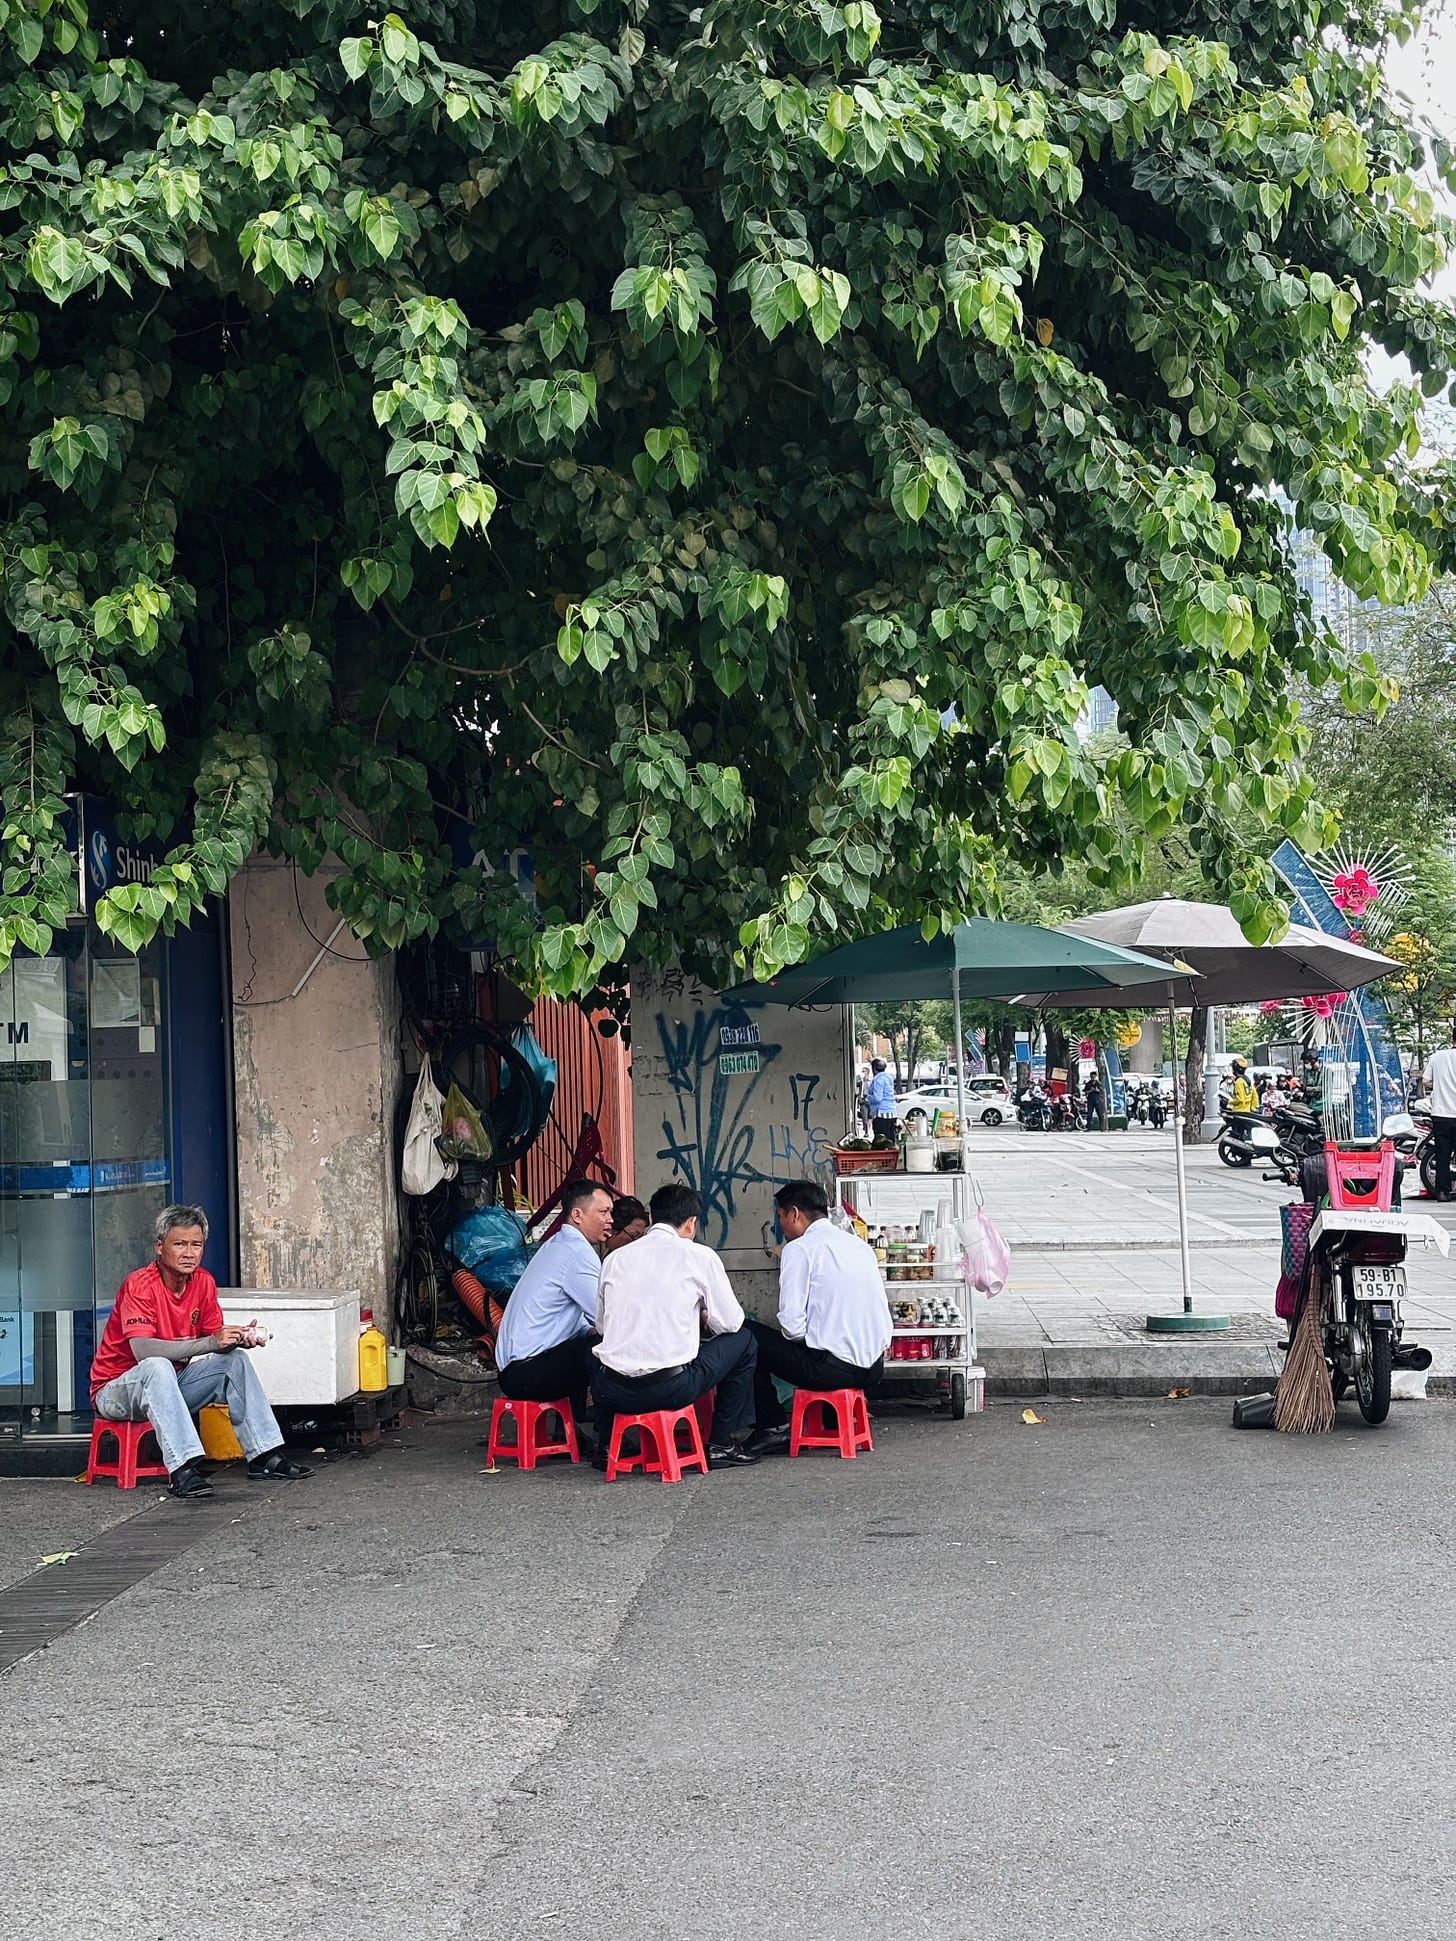 Men eating on plastic stools in Vietnam